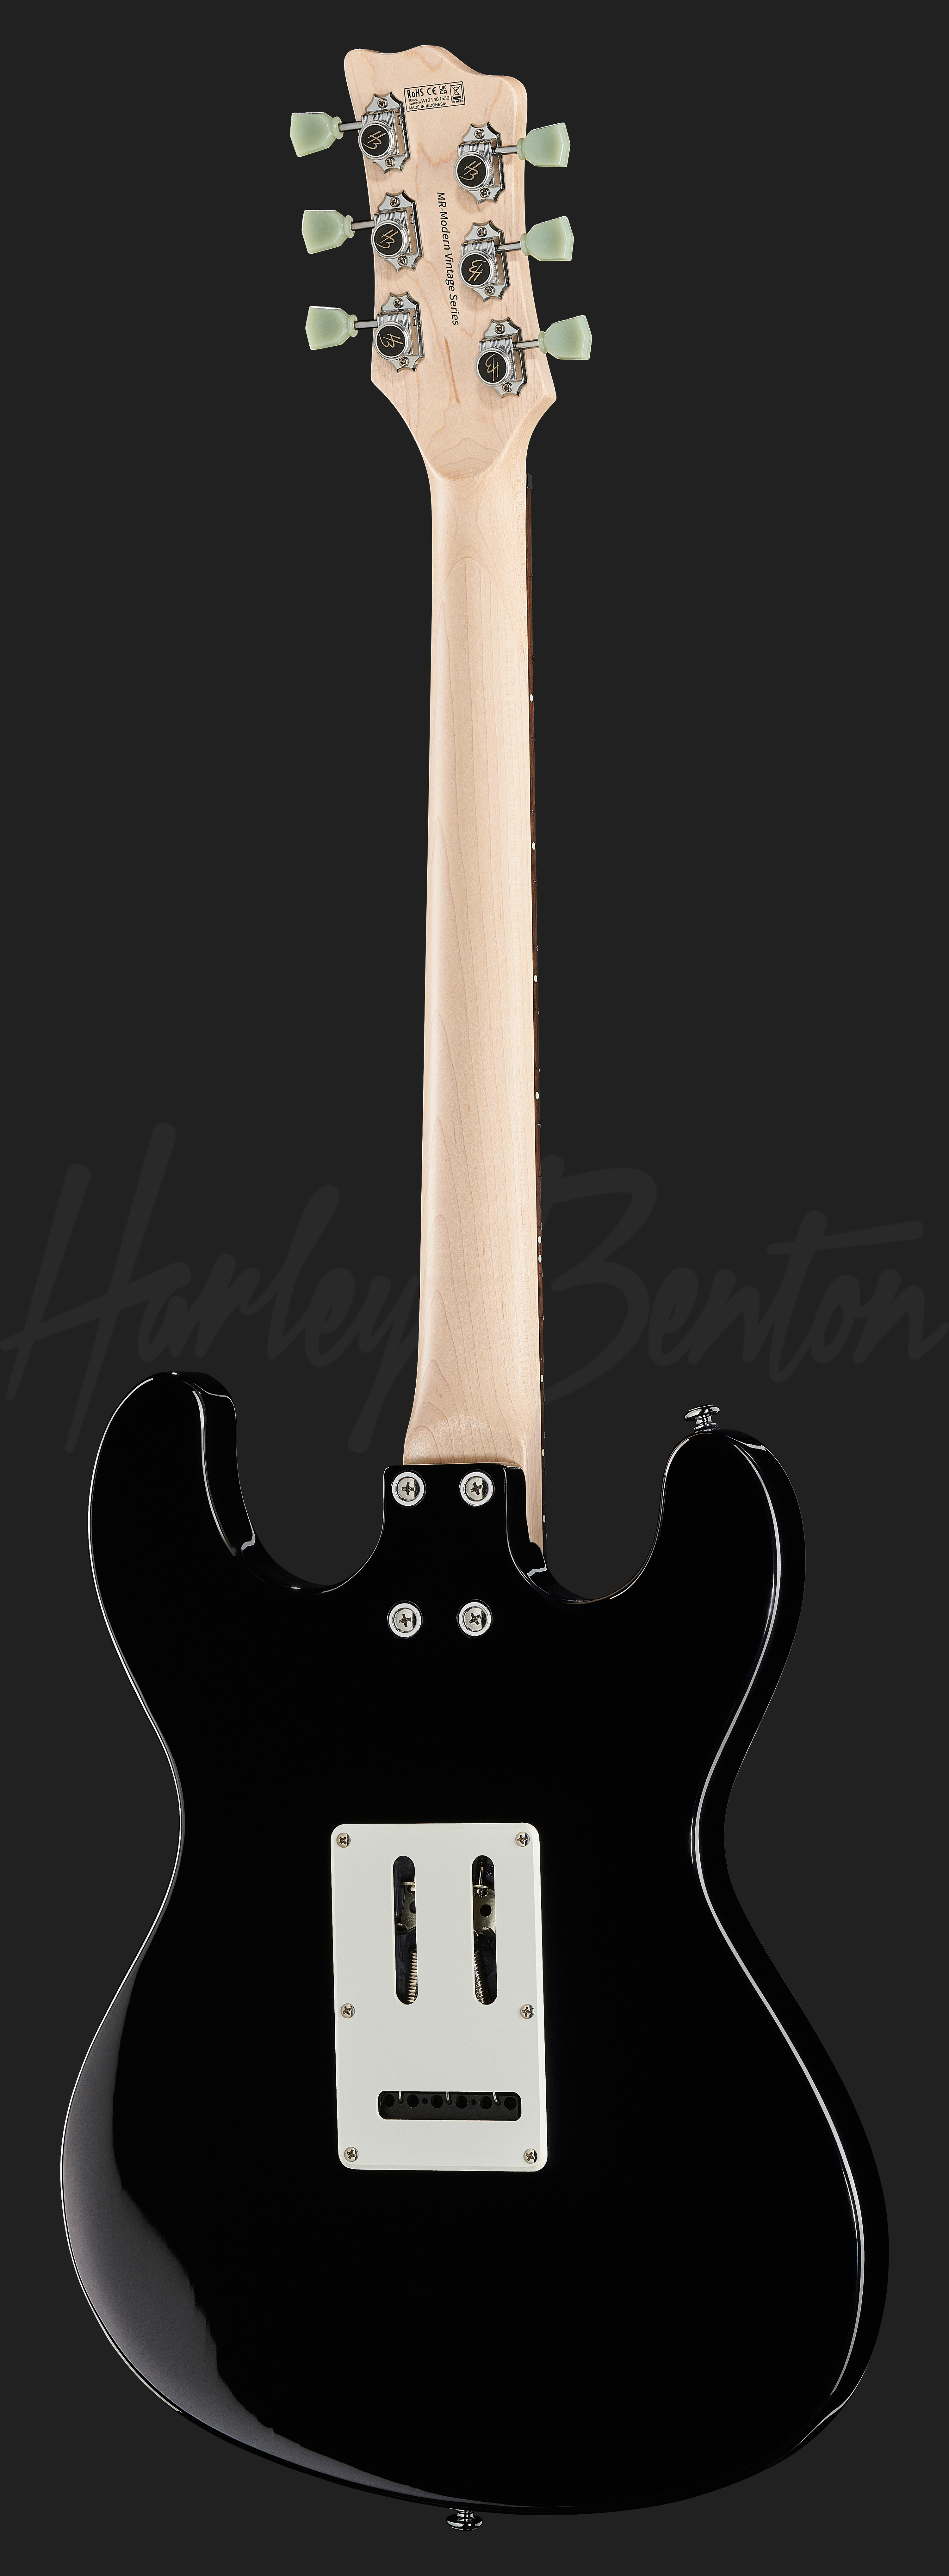 Harley Benton MR-Modern guitar review